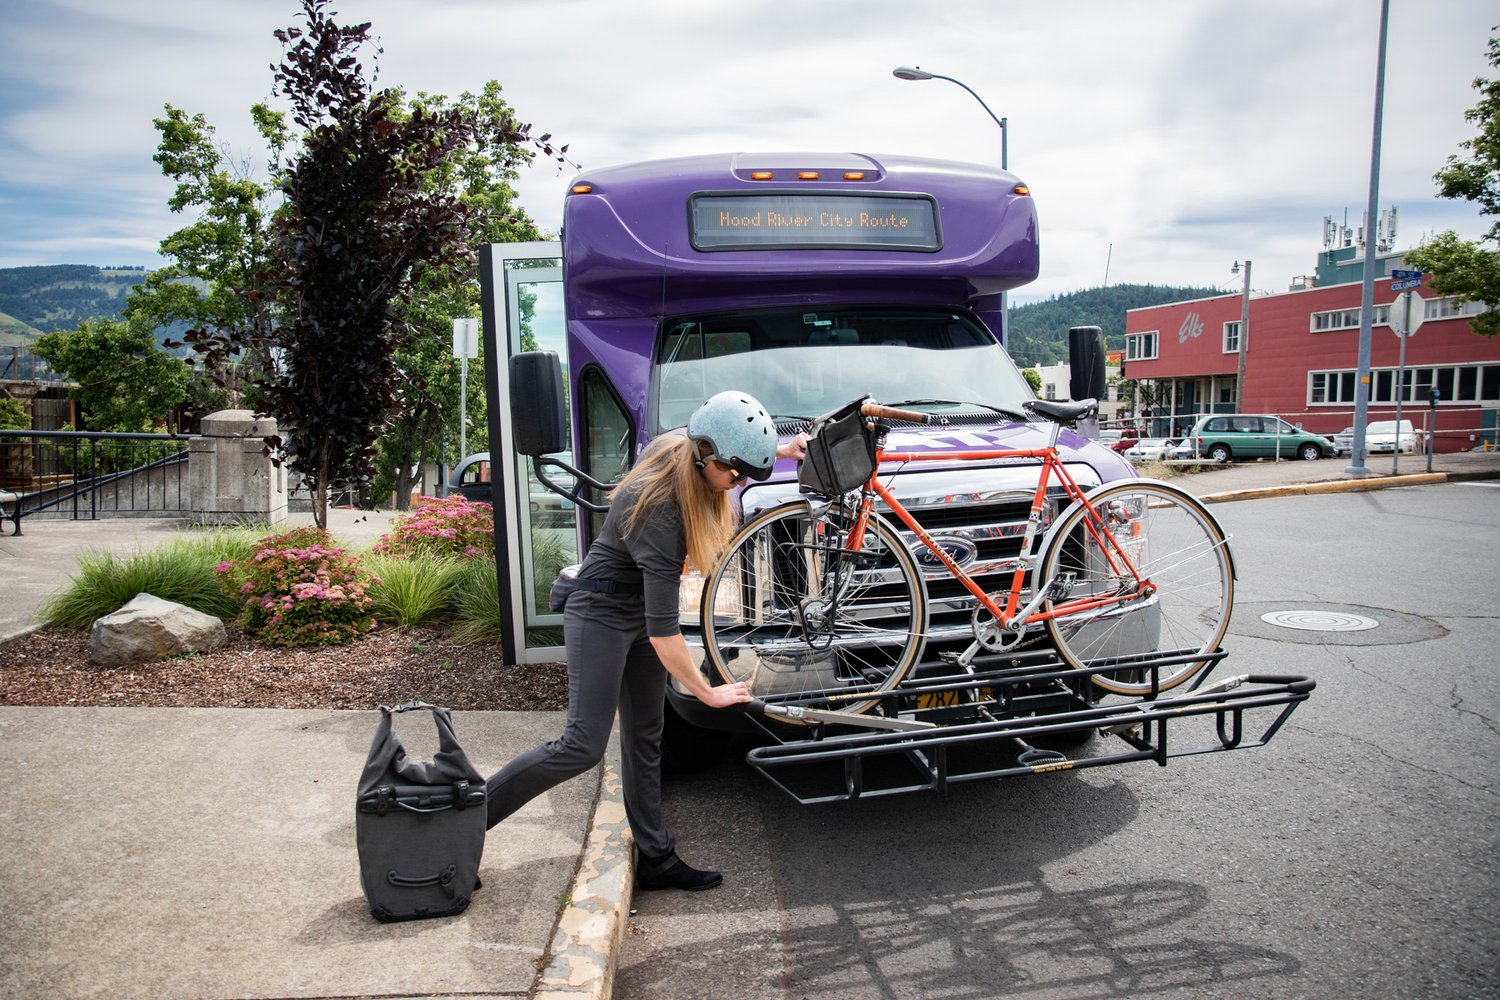 Person-unloading-or-loading-bicycle-onto-bus-bike-rack.jpg